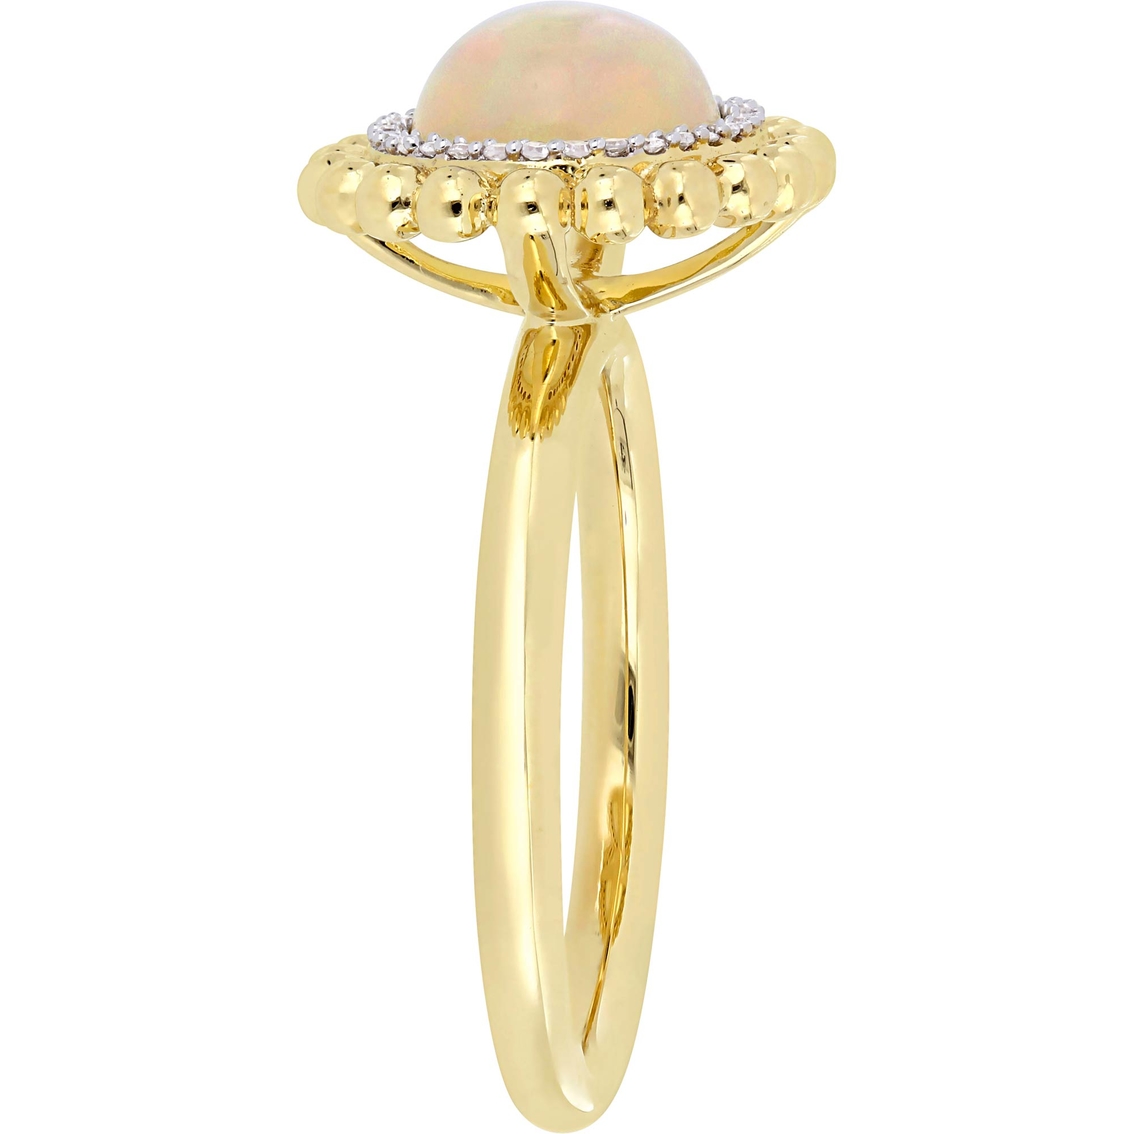 Sofia B. 14K Yellow Gold 1/10 CTW Diamond and Ethiopian Opal Halo Ring - Image 2 of 4